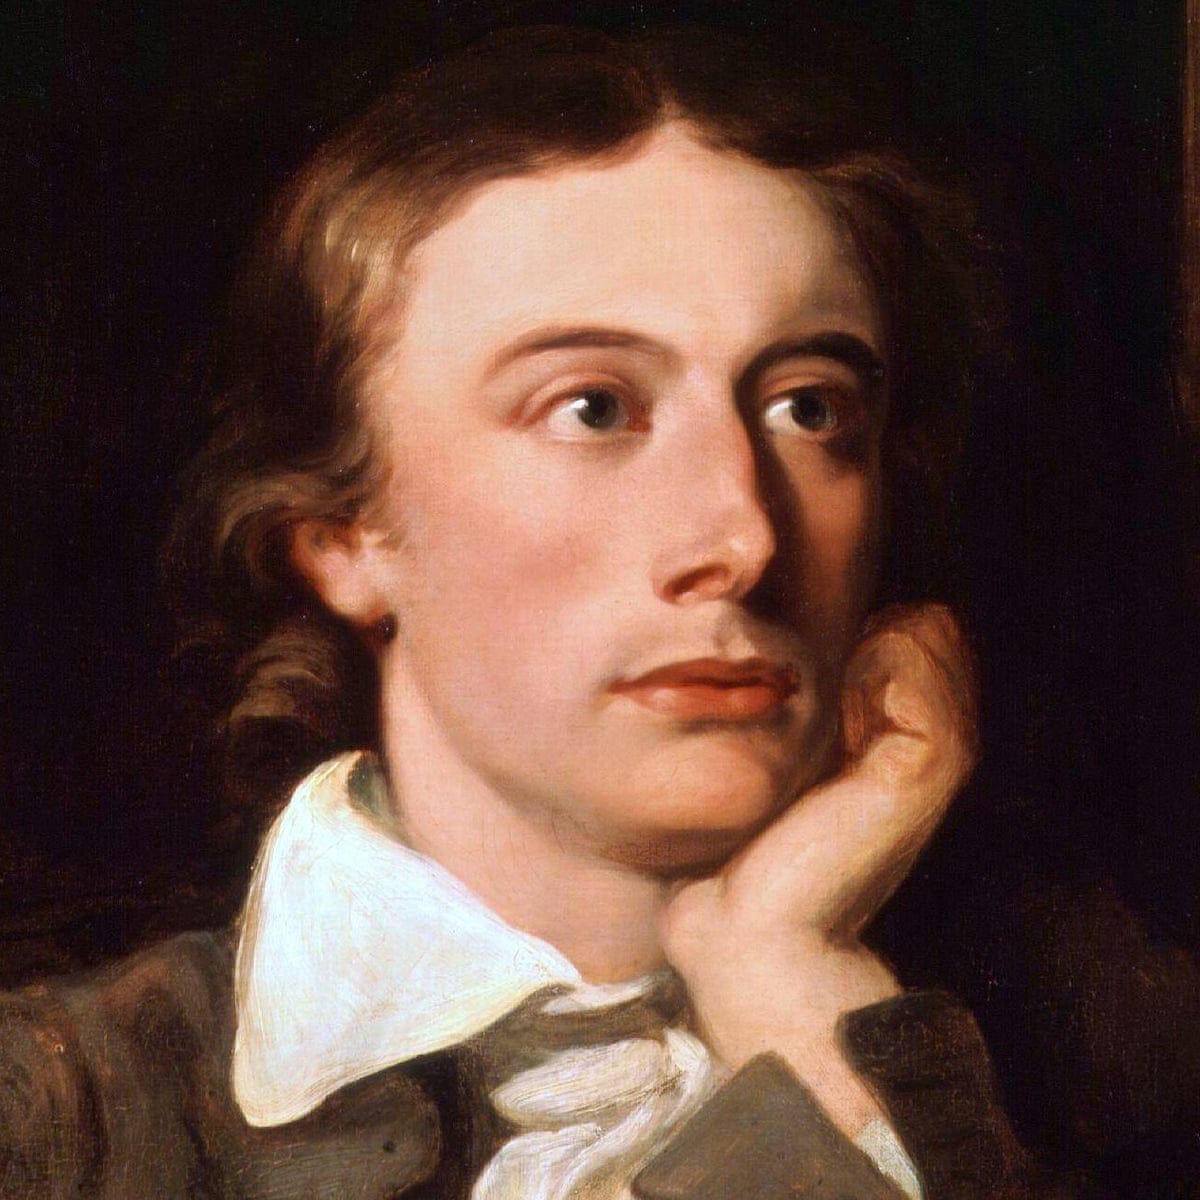 John Keats’ ”How many bards gild the lapses of time”